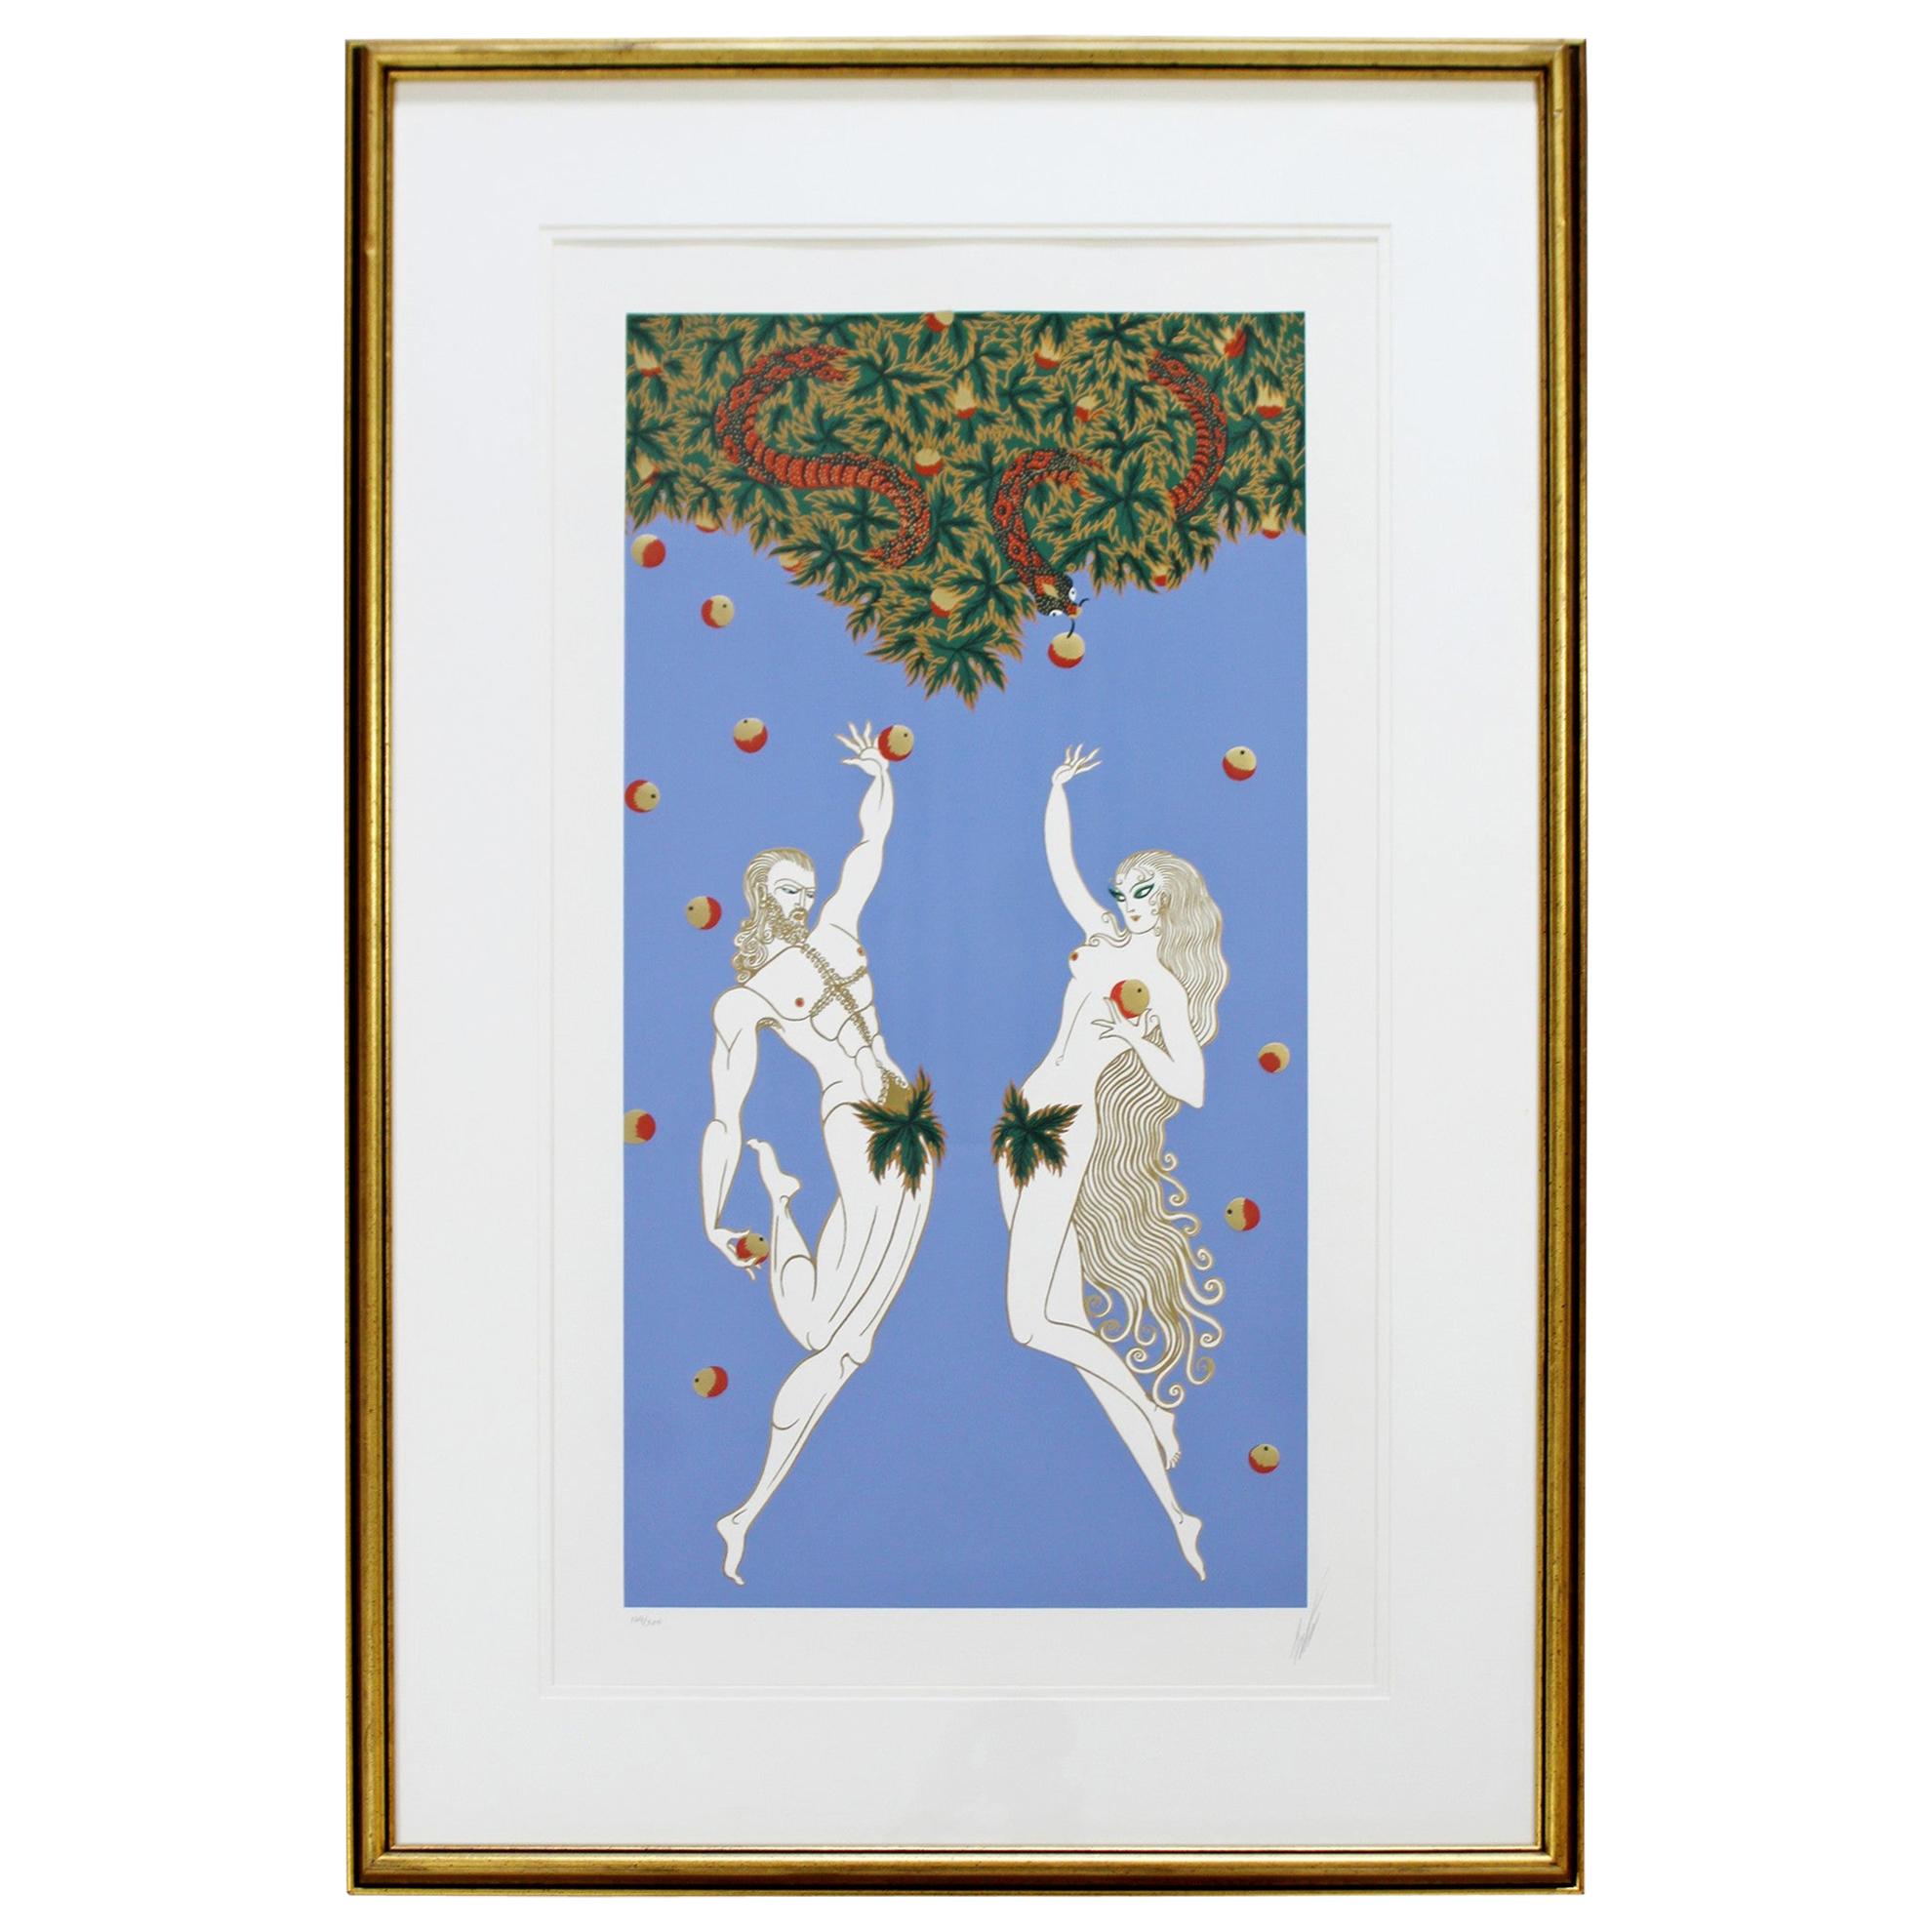 Contemporary Modern Framed Erte Adam & Eve Serigraph Signed & Numbered 169/300